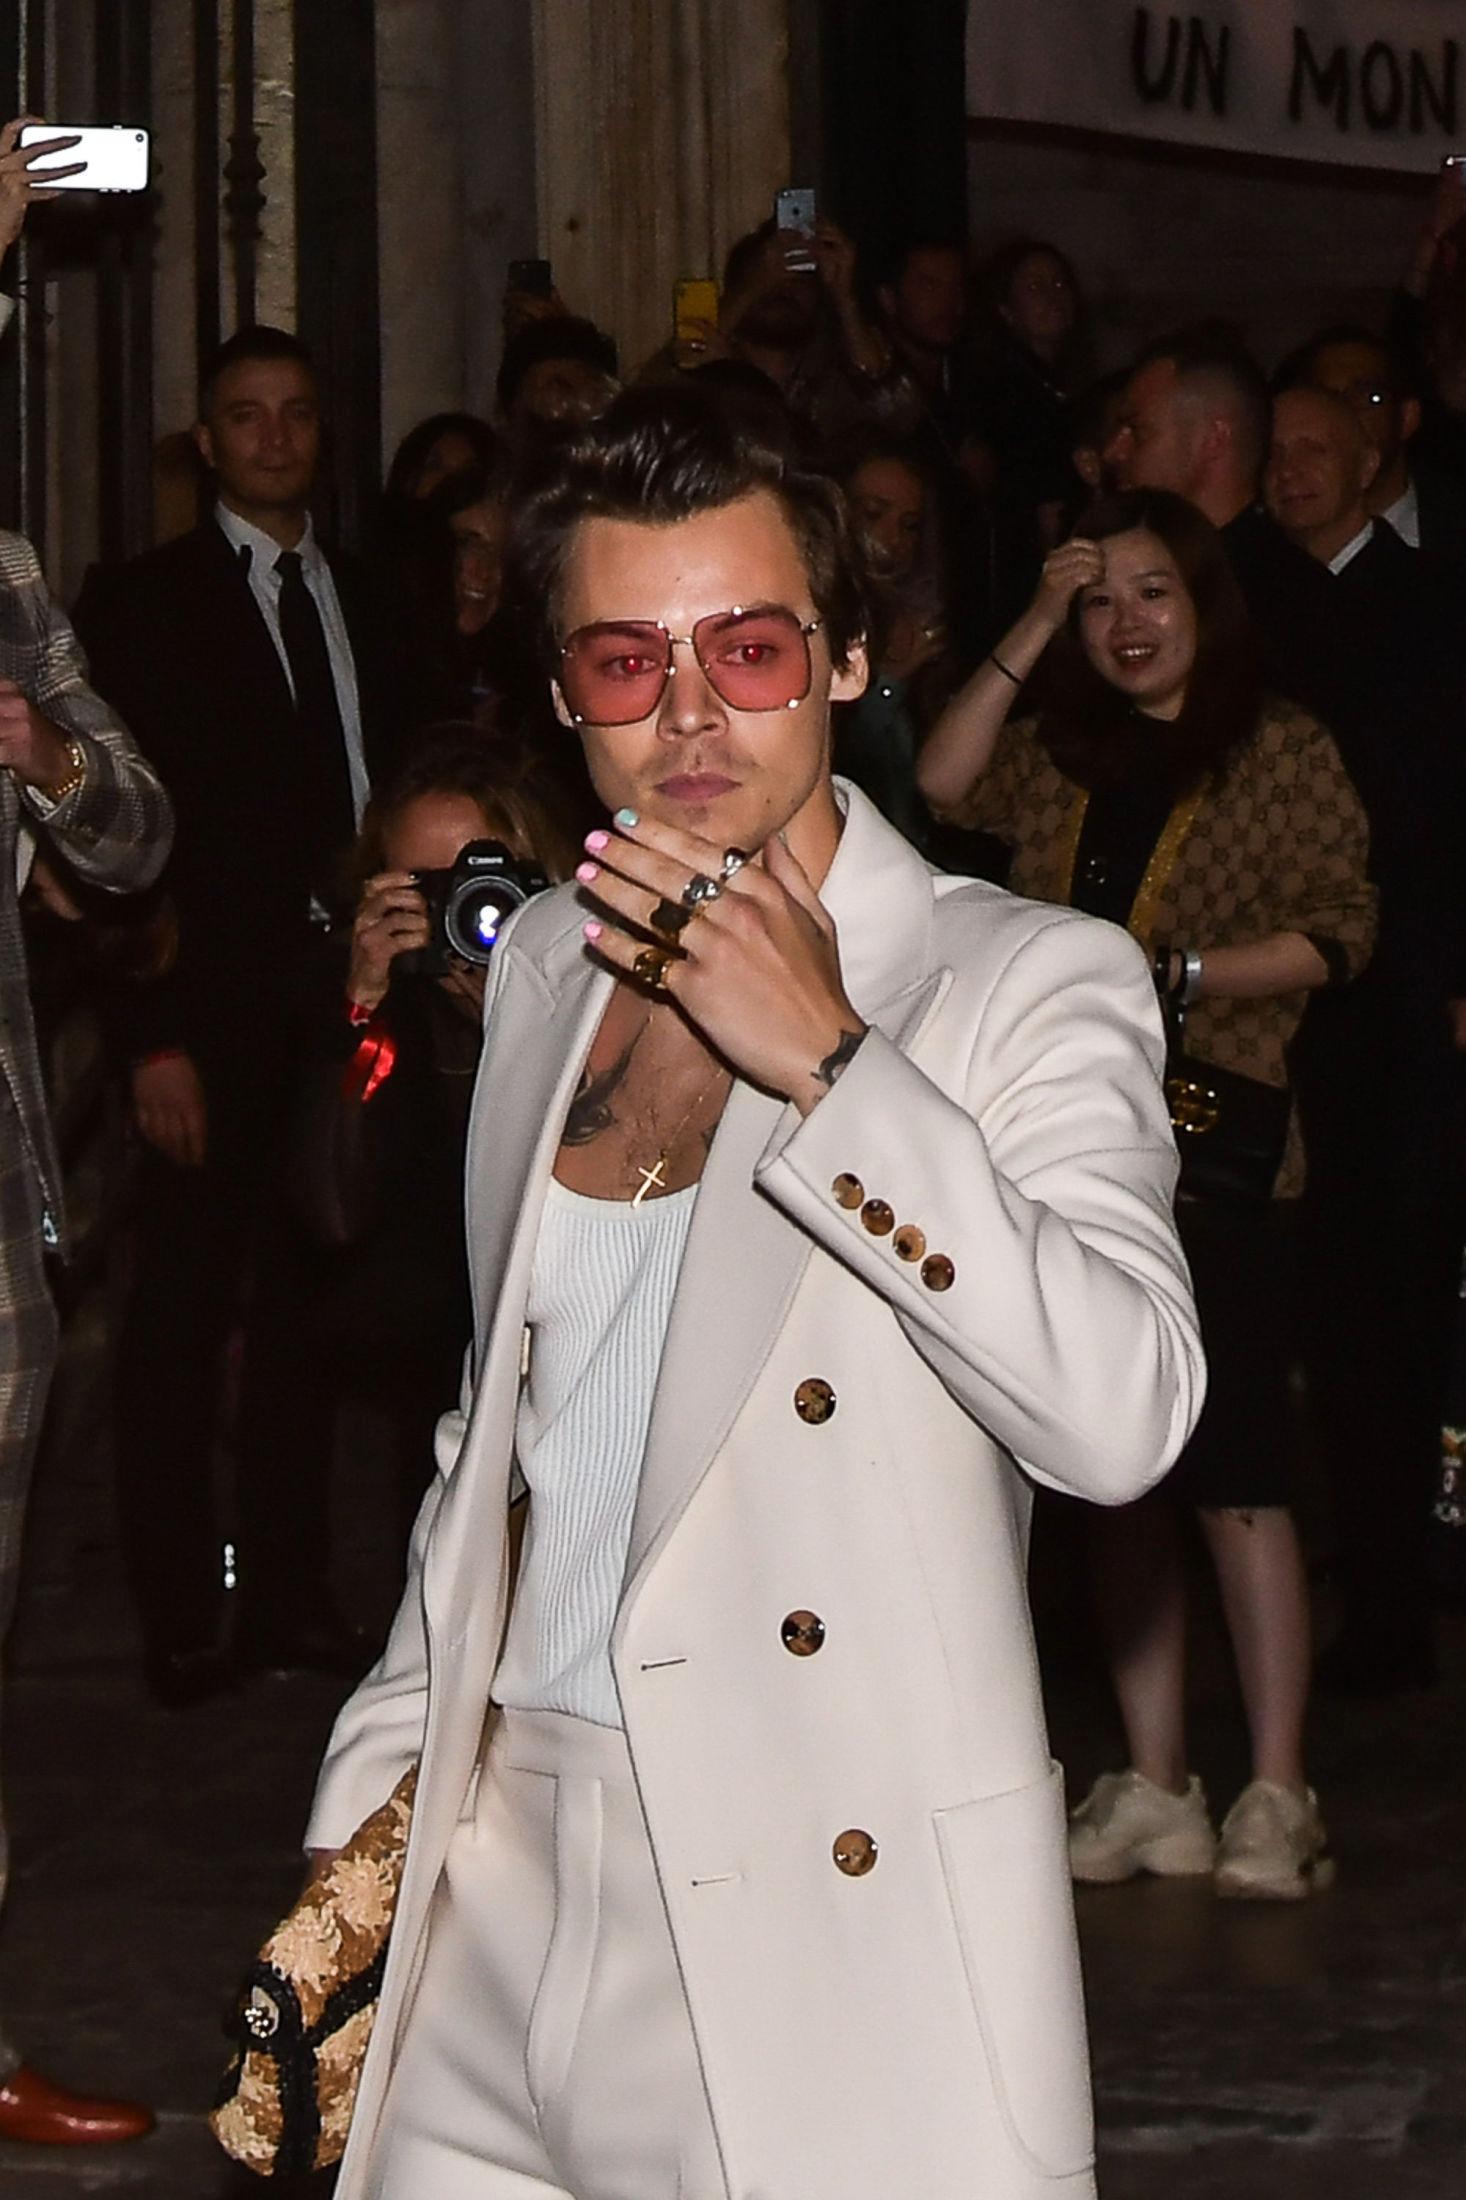 GUCCI GUCCI GUCCI: Harry Styles i lyserosa dress fra Gucci i Roma. Foto: Pa Photos